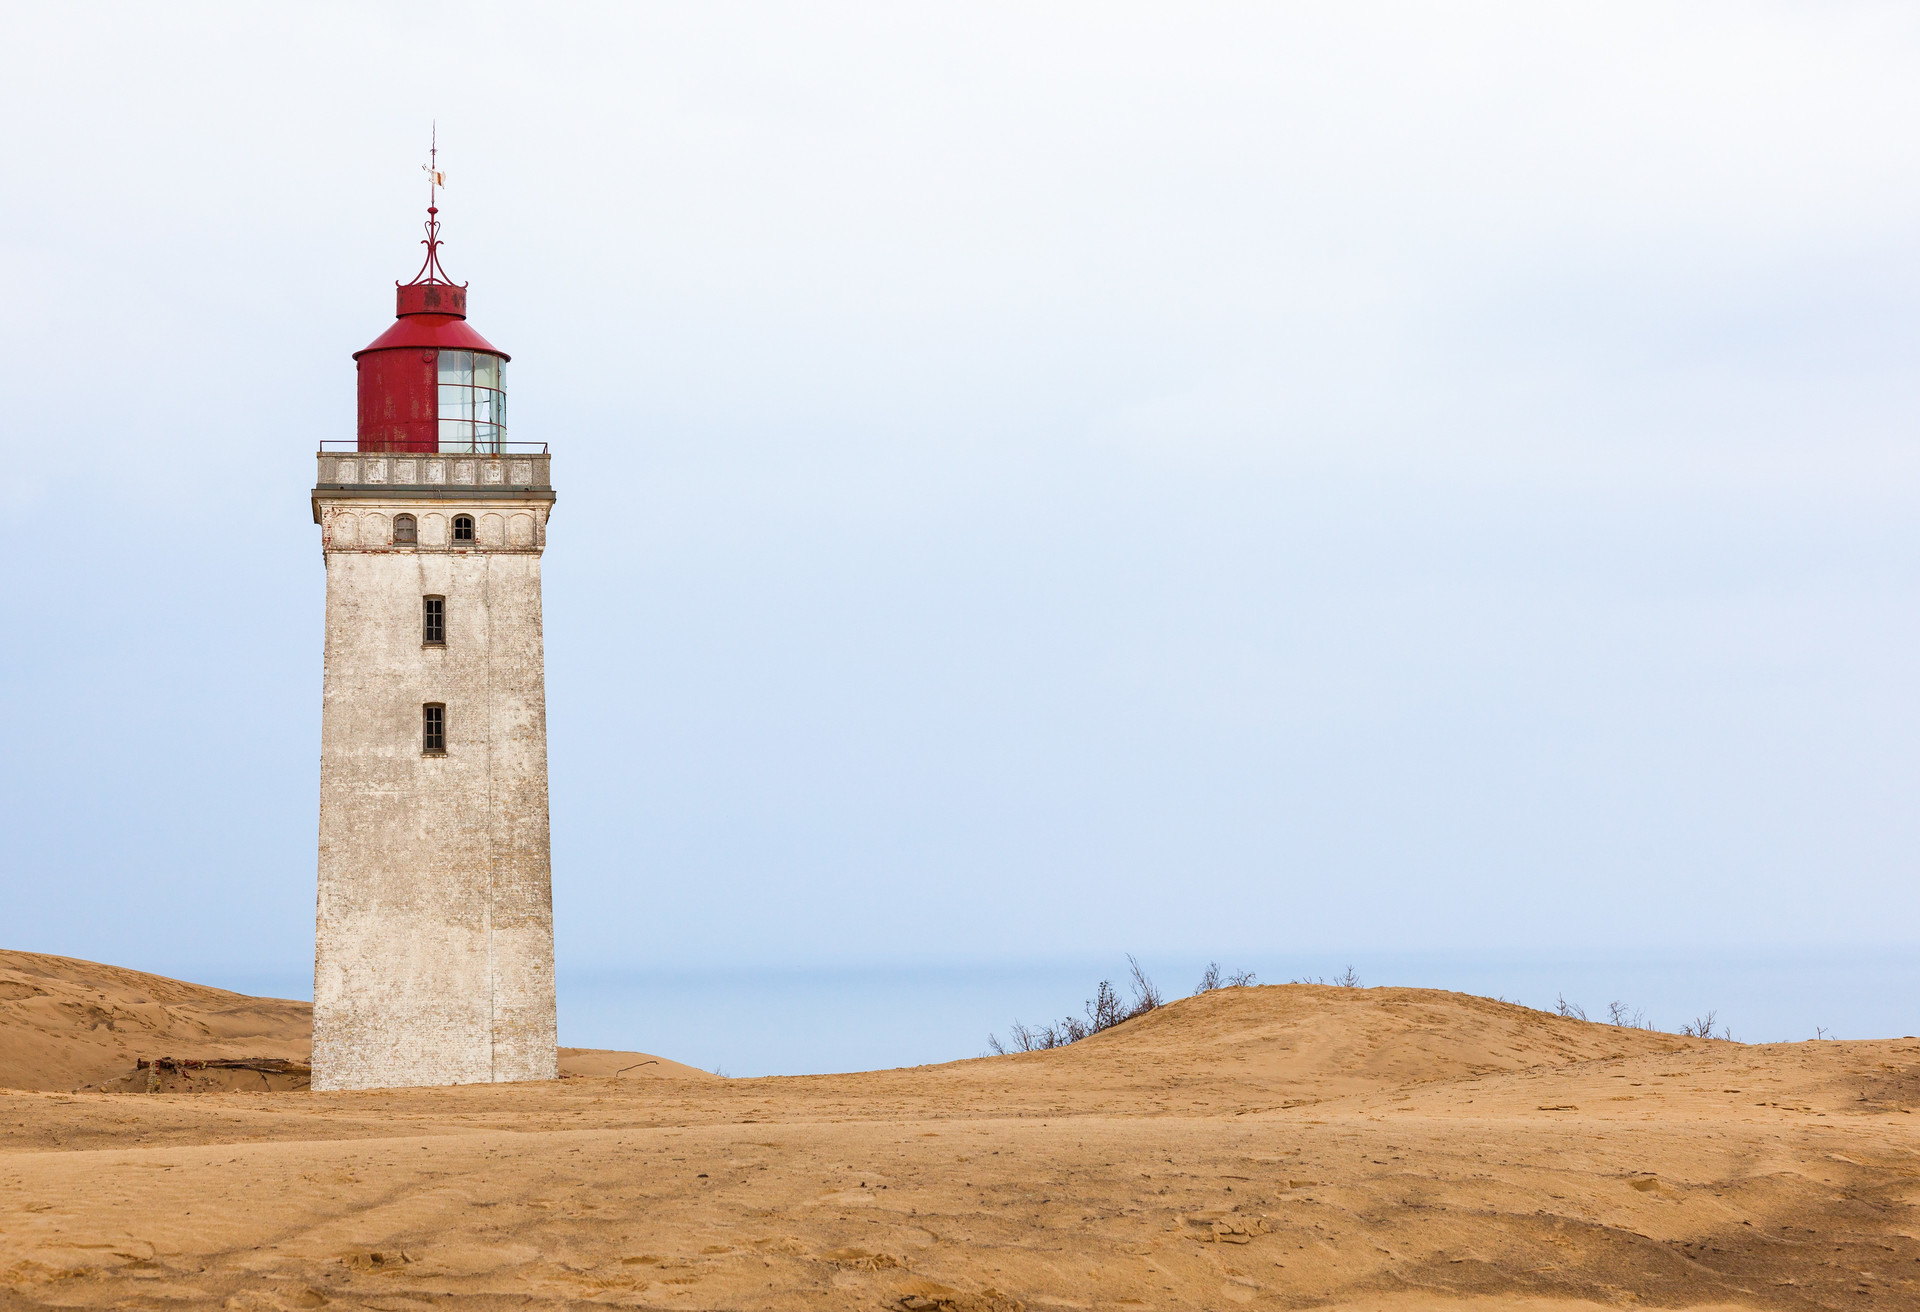 Lighthouse at Råbjerg mile in Denmark in the sand dunes